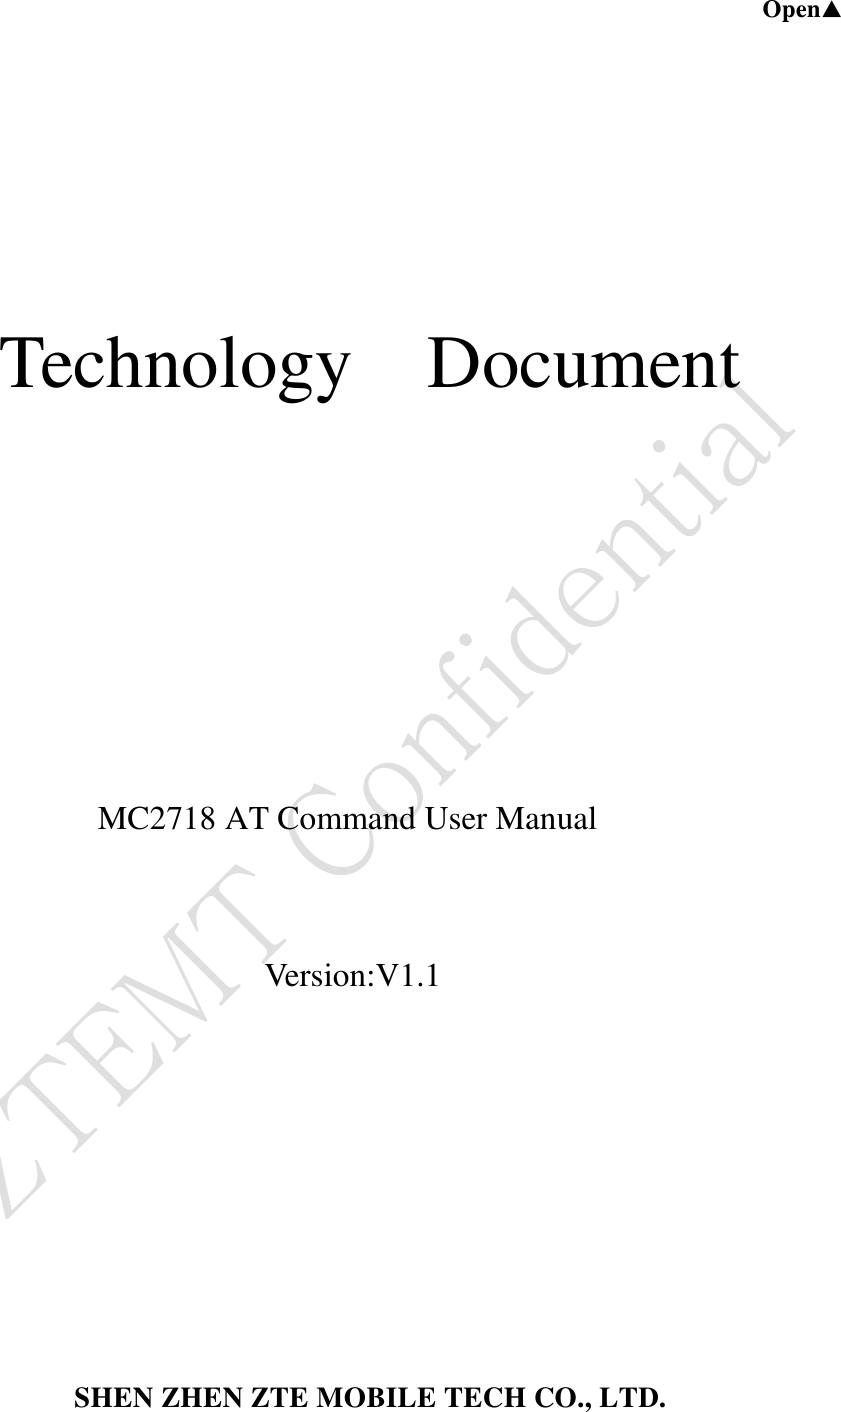 Open▲     Technology  Document                         MC2718 AT Command User Manual                                                           Version:V1.1              SHEN ZHEN ZTE MOBILE TECH CO., LTD.  